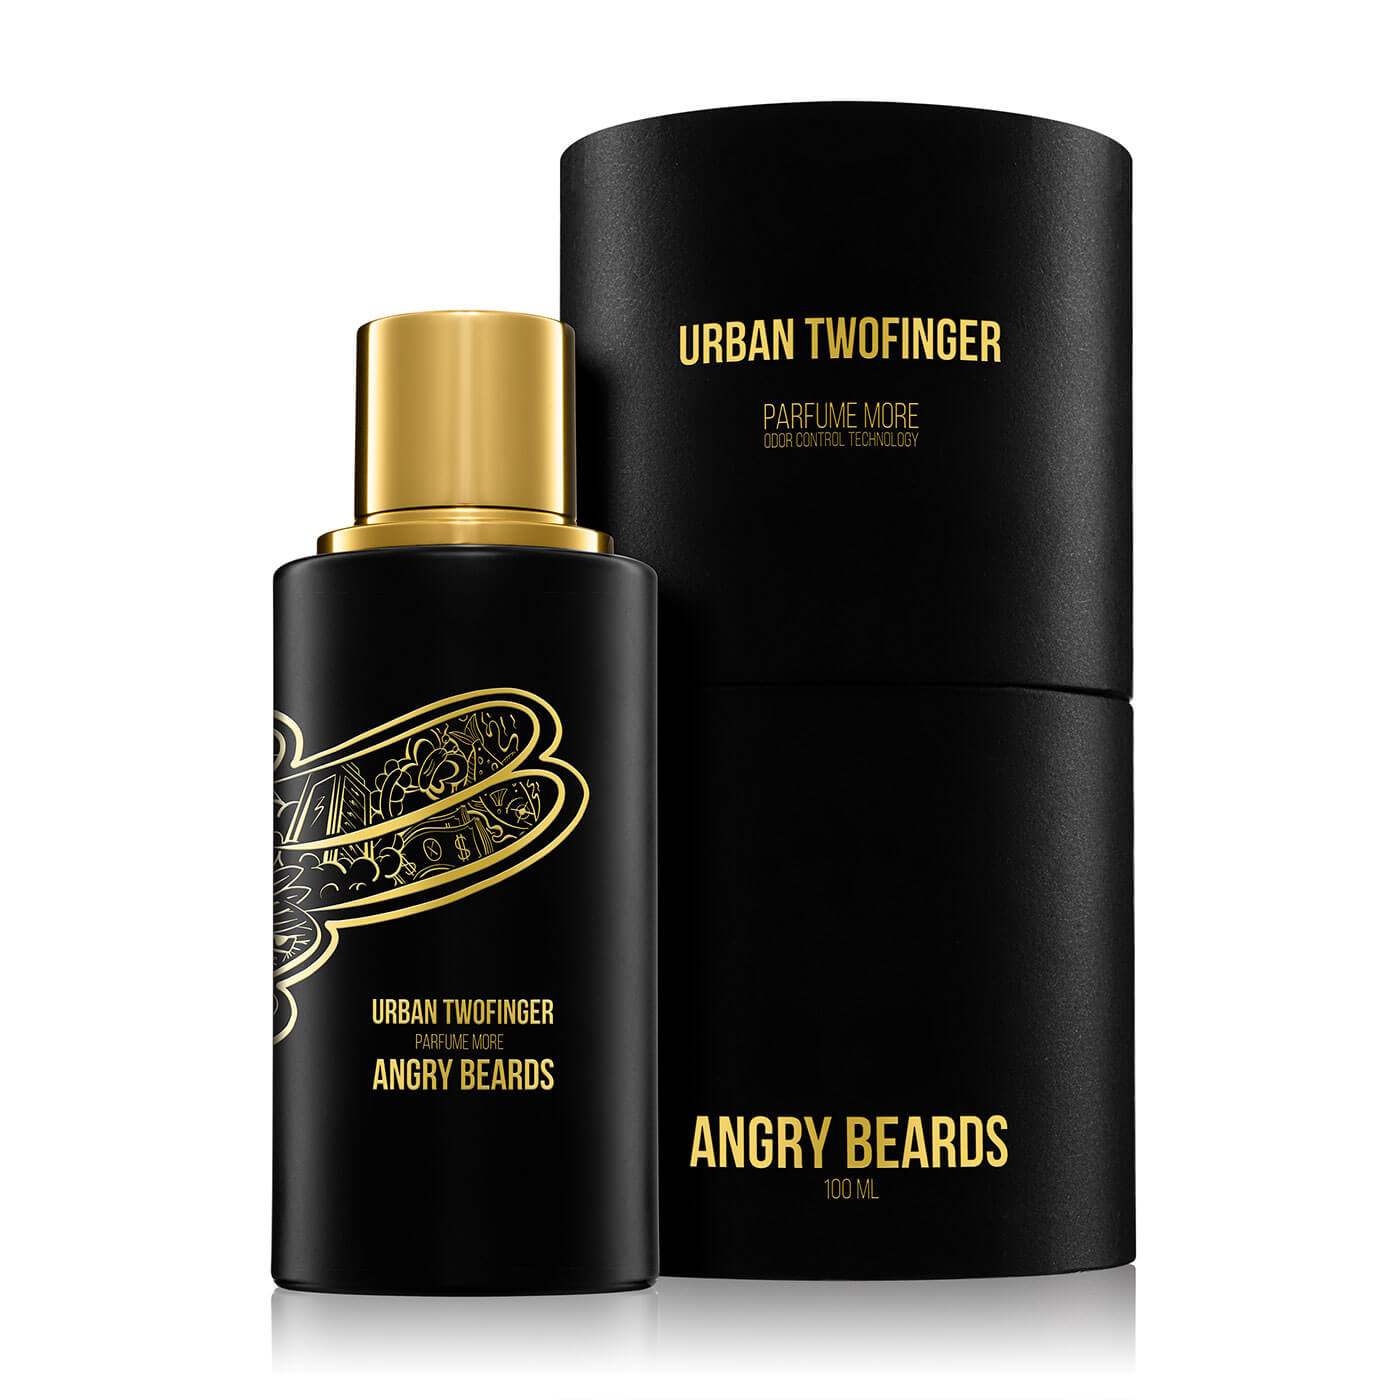 Angry Beards Parfém Urban Twofinger (Parfume More) 2 ml - tester